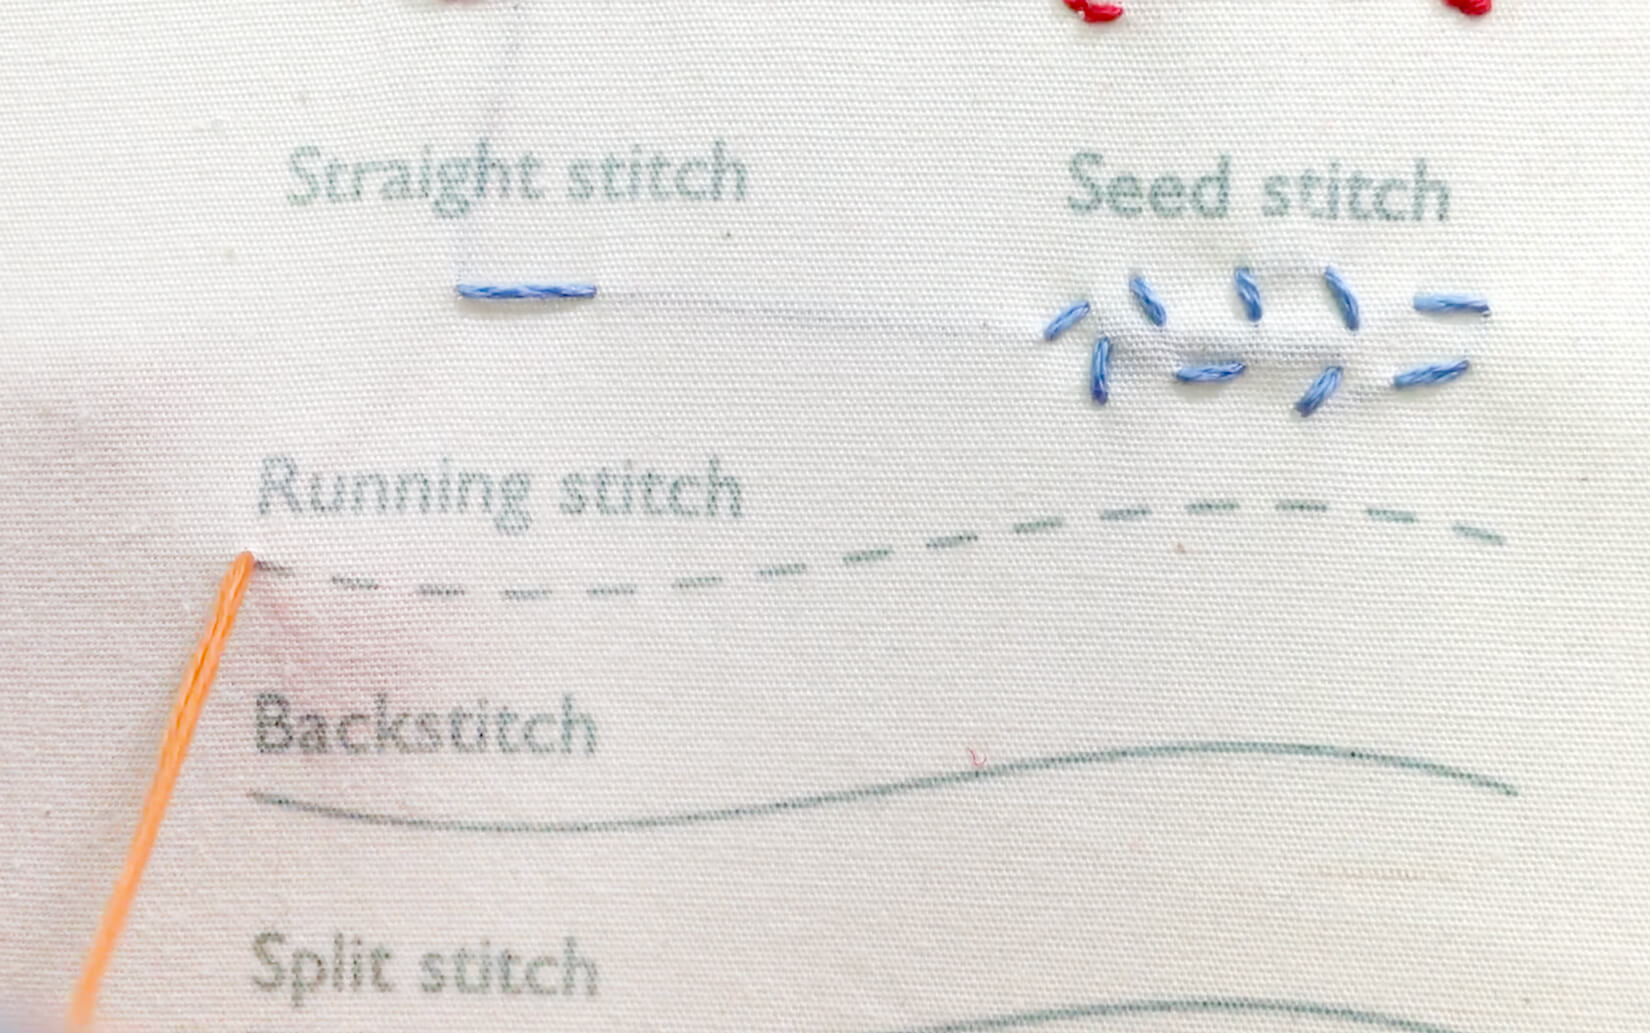 Image of stitching the running stitch